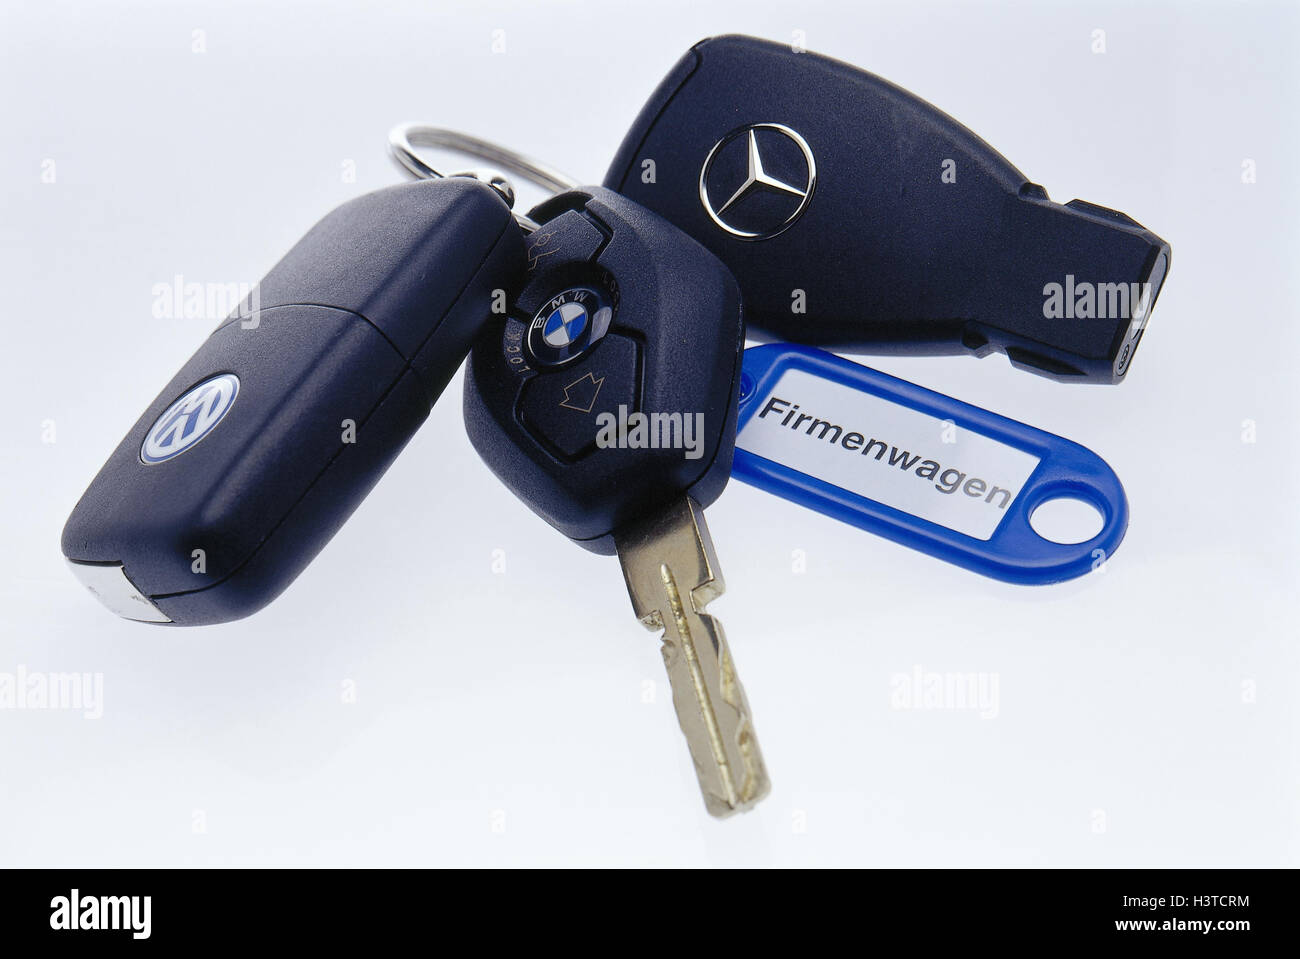 Auto Schlüssel, BMW 5er Reihe, 7. Reihe, Mercedes E-Klasse